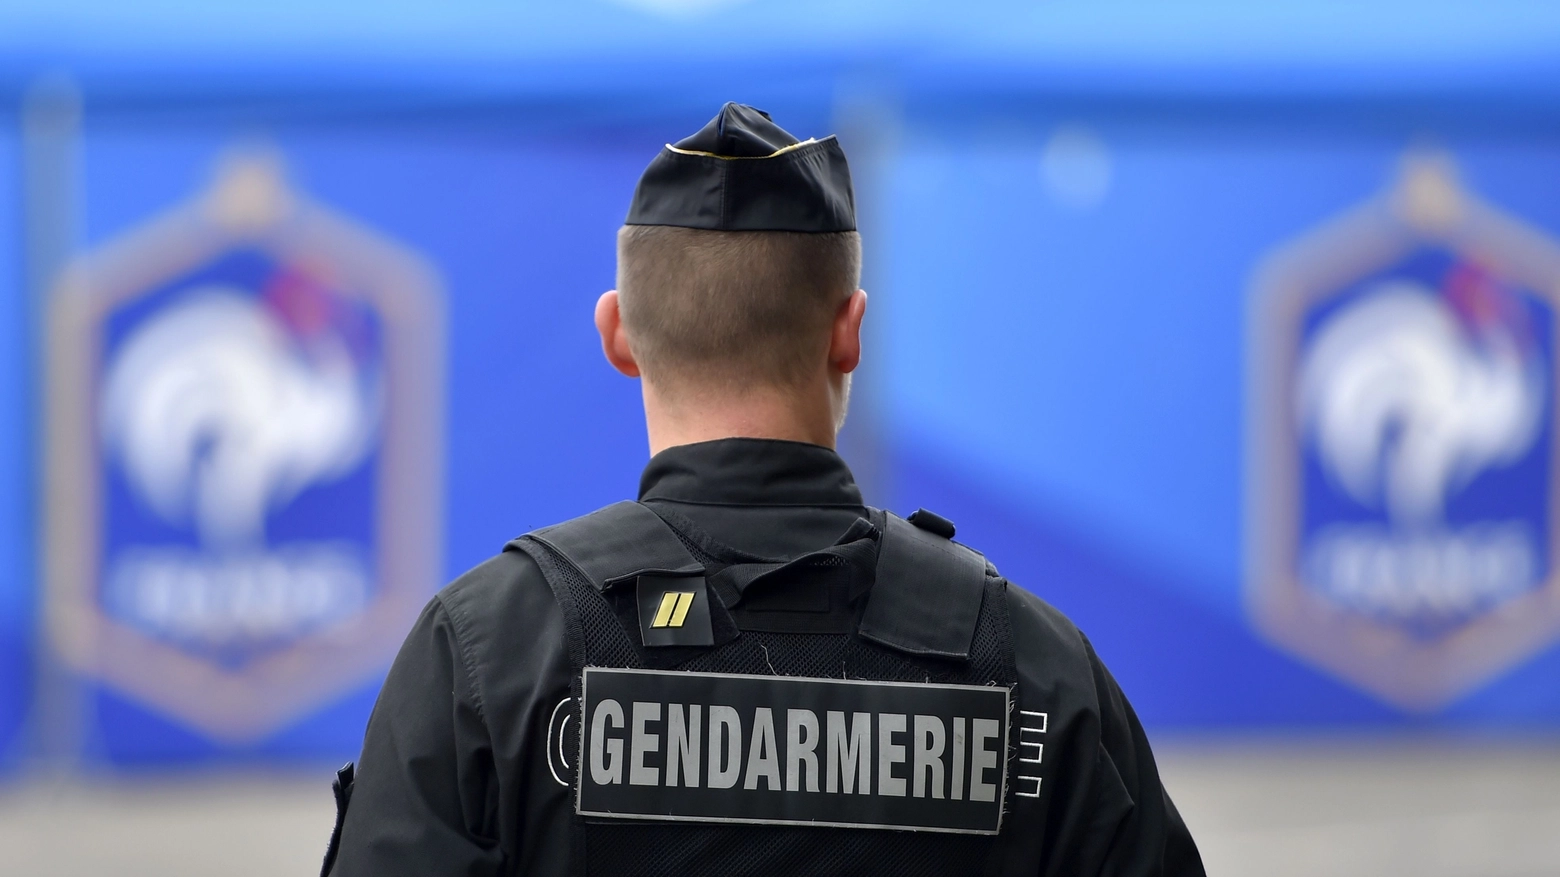 Polizia francese, foto generica (Afp)